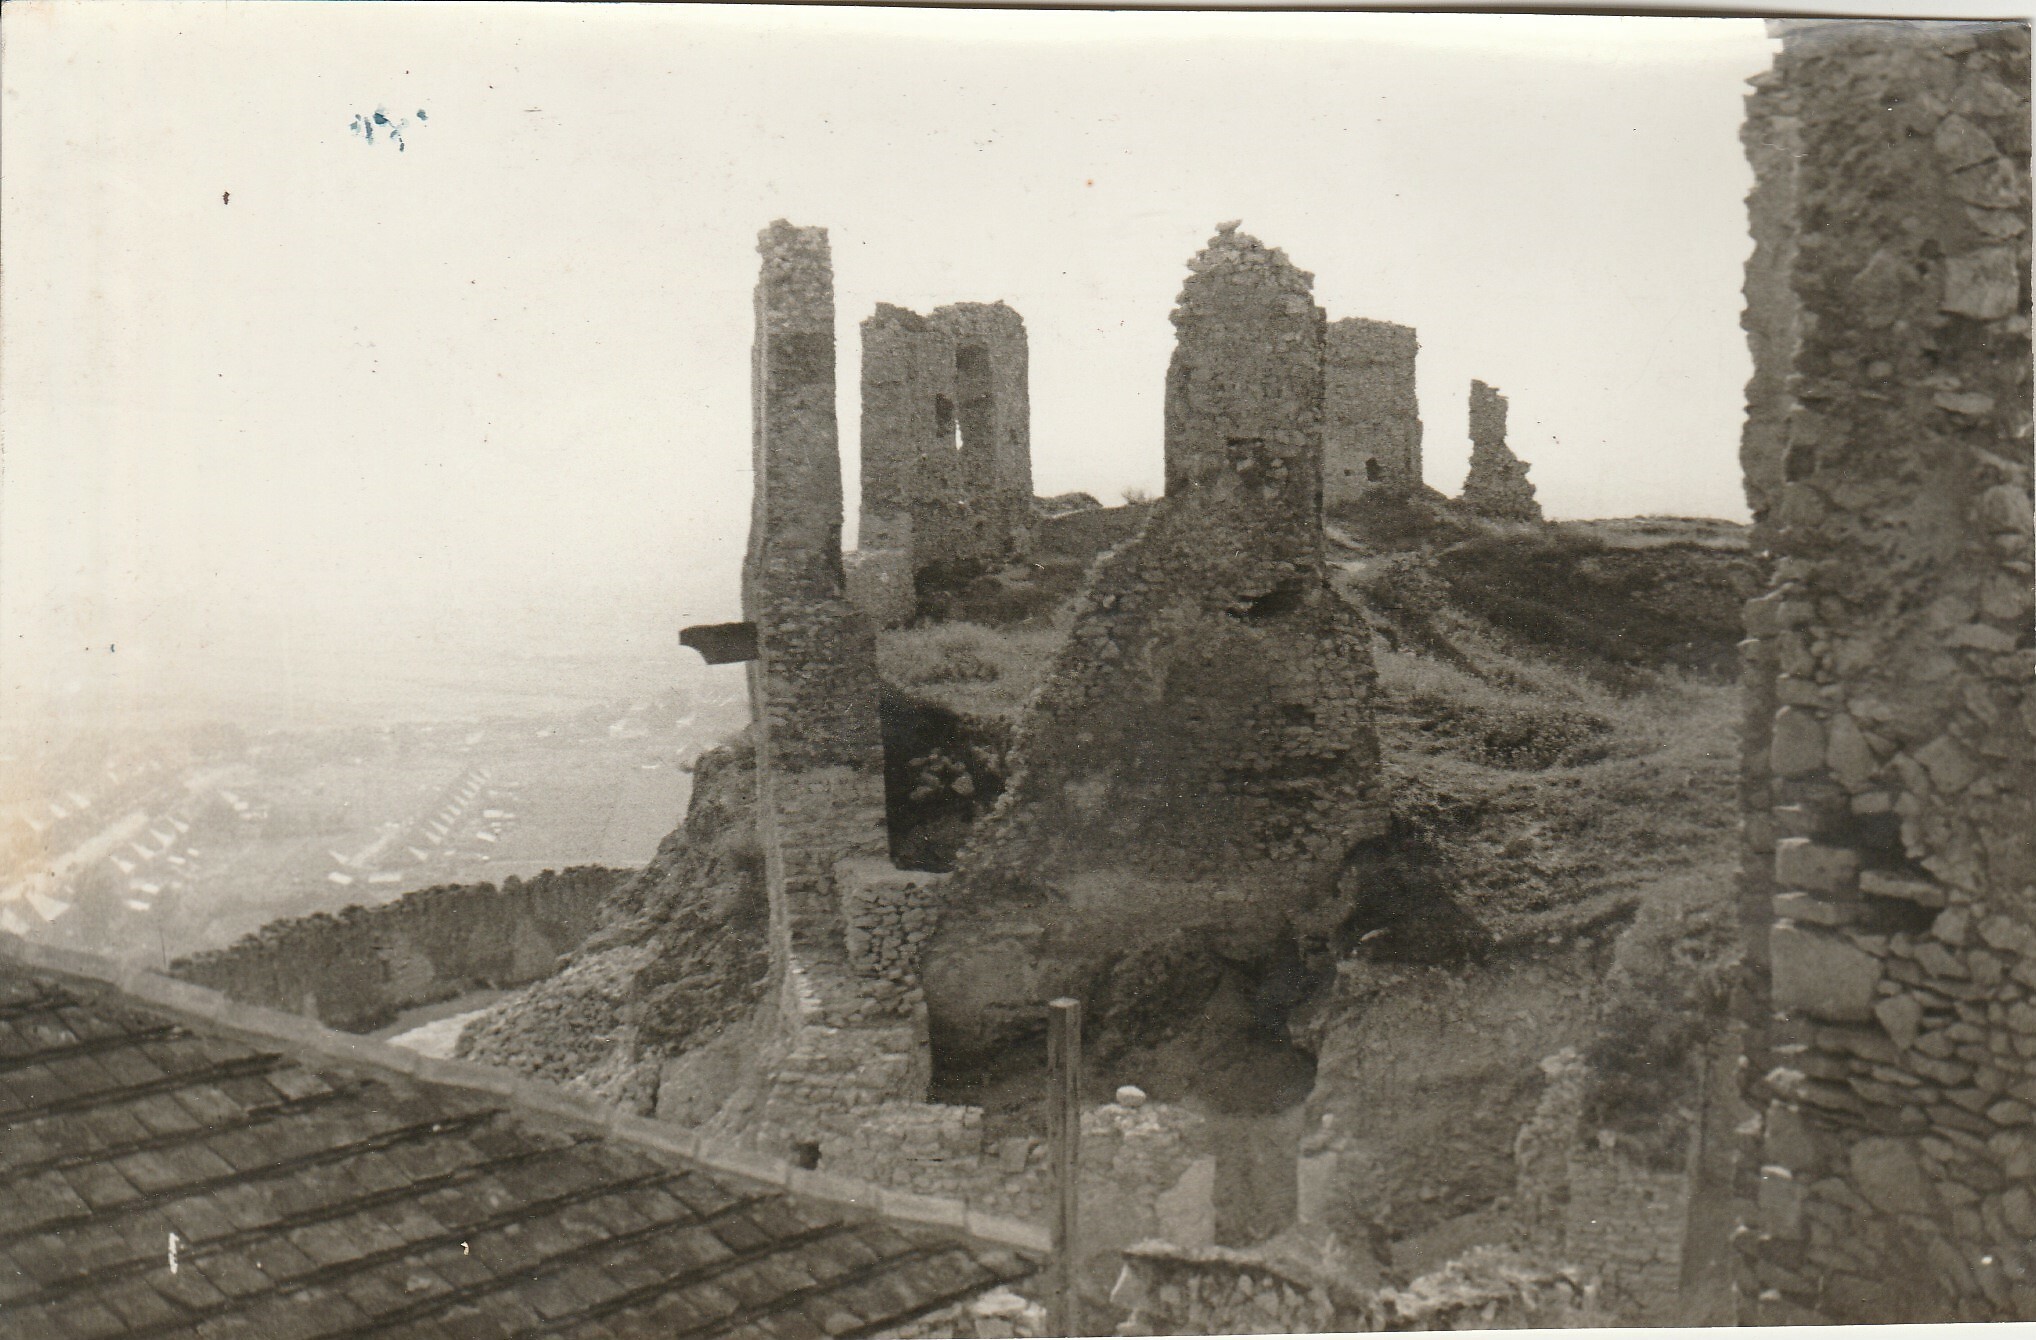 A sümegi várrom fényképe 1960 körül (Tapolcai Városi Múzeum CC BY-NC-SA)